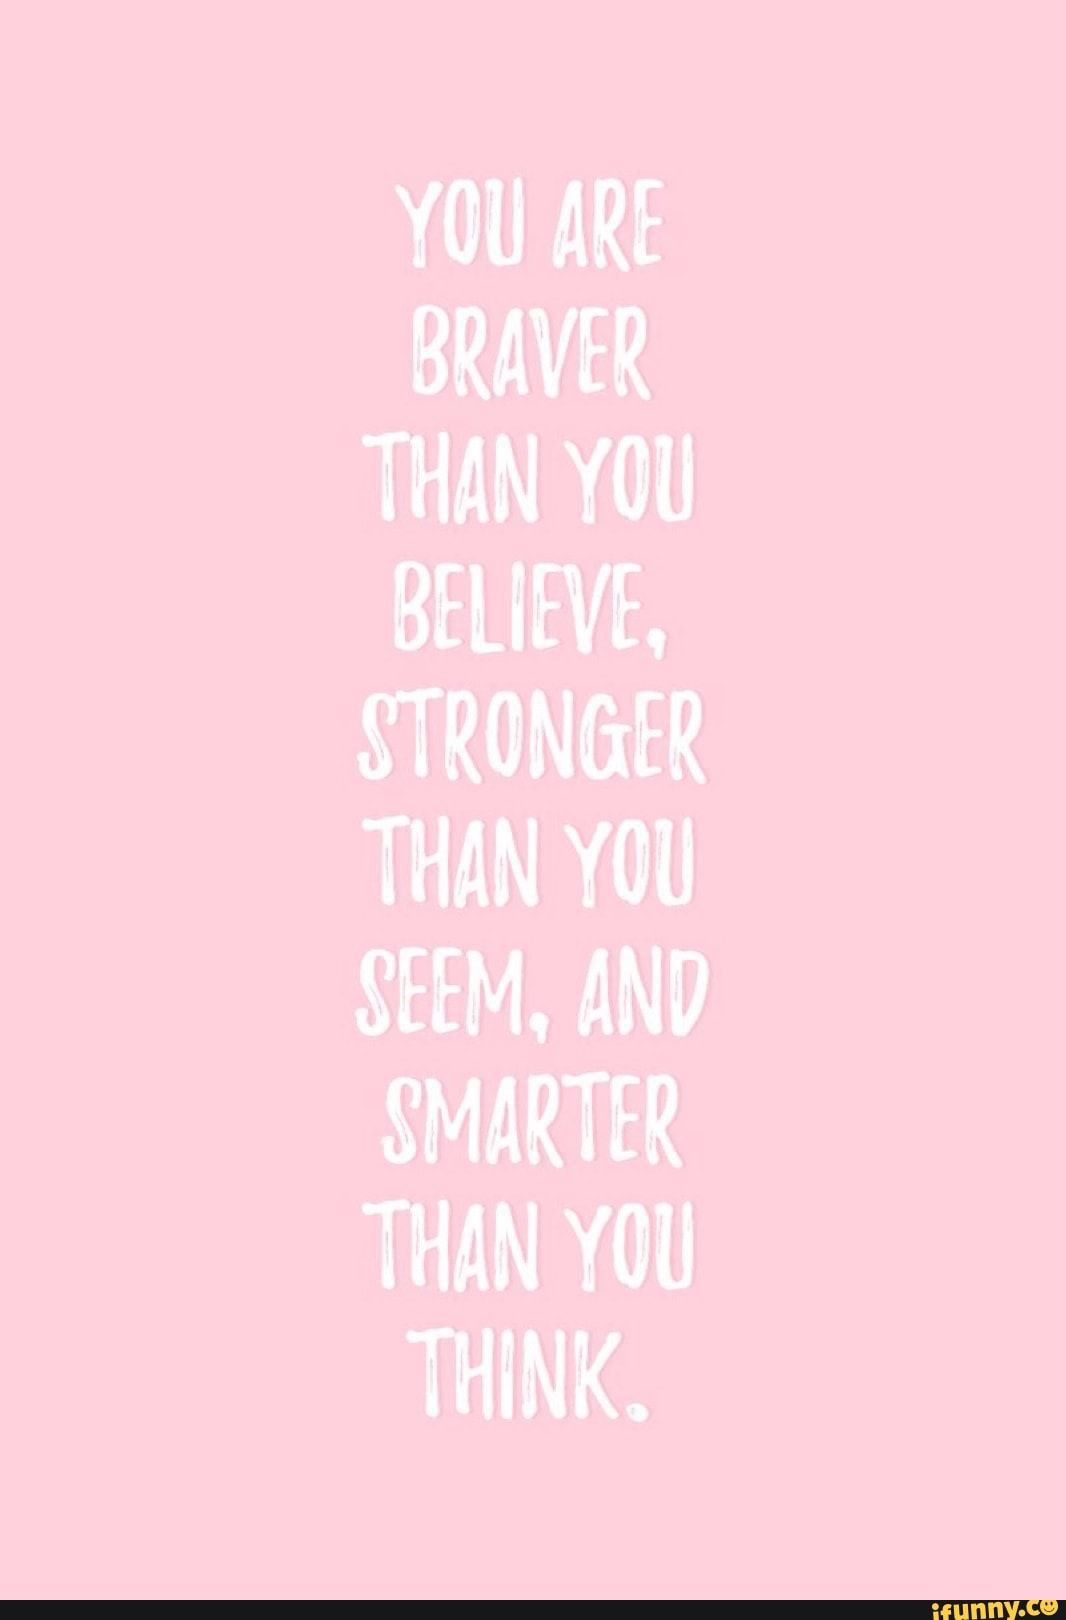 BRAVER STRONﬁER SEEM. AND SMARTER :). Pink wallpaper quotes